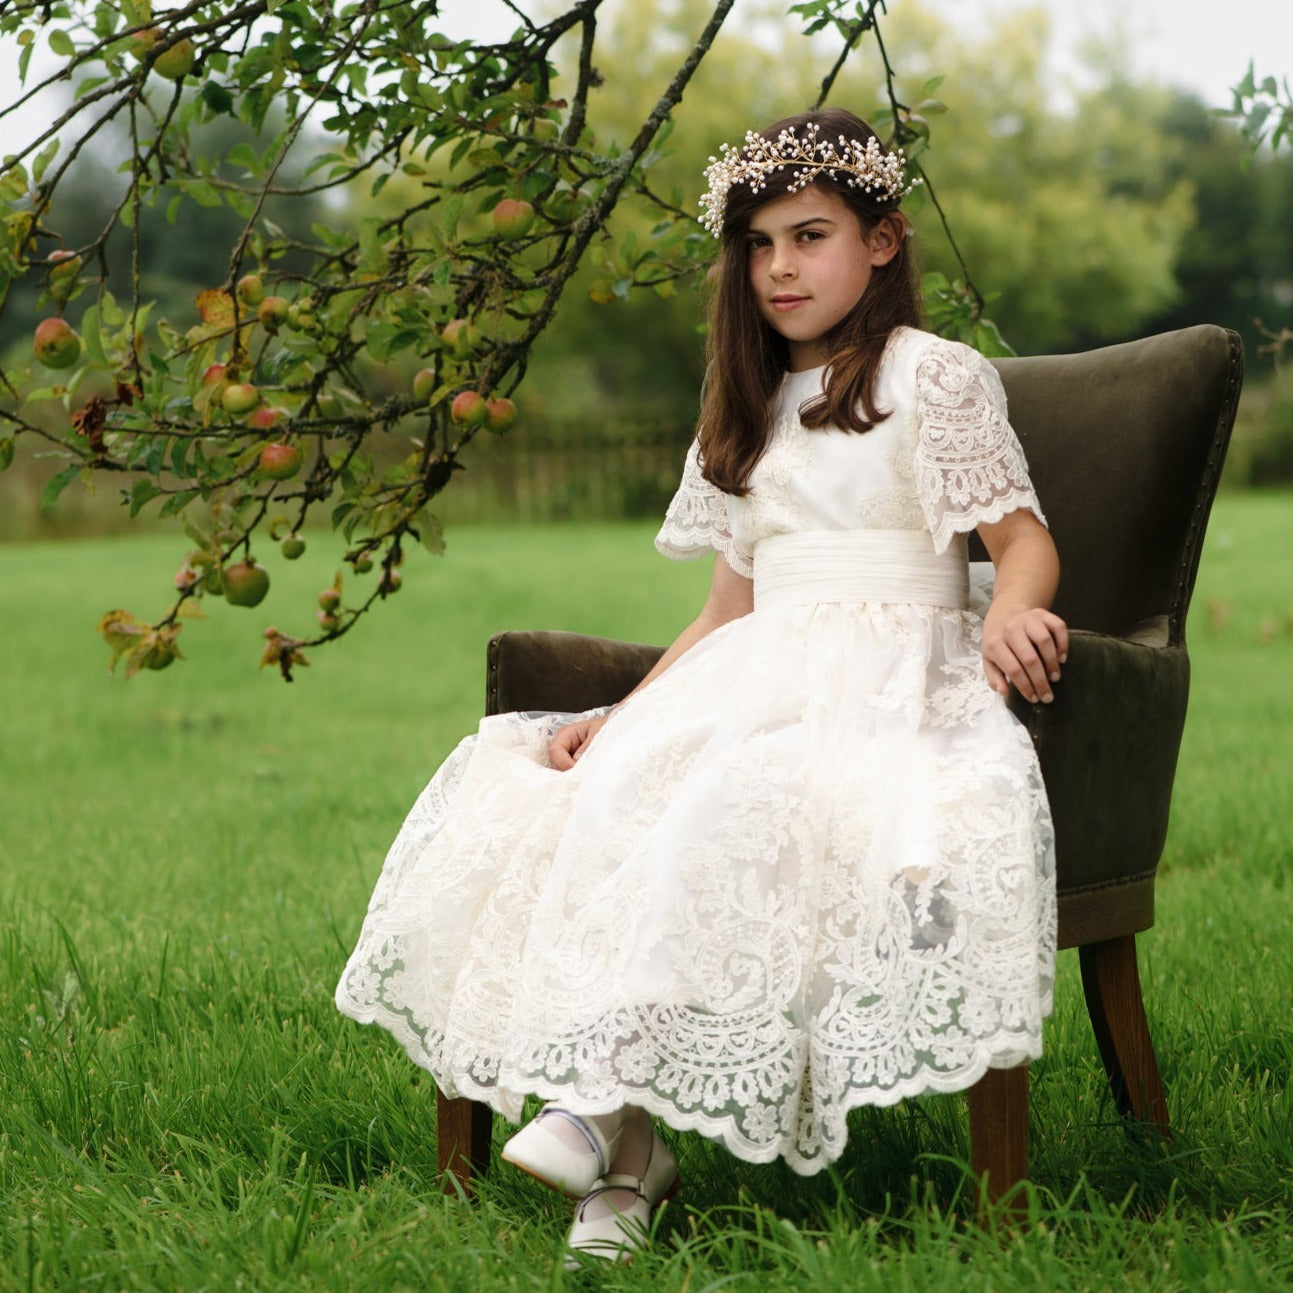 Caroline Classic Communion Dress - Alice in Wonderland Dress